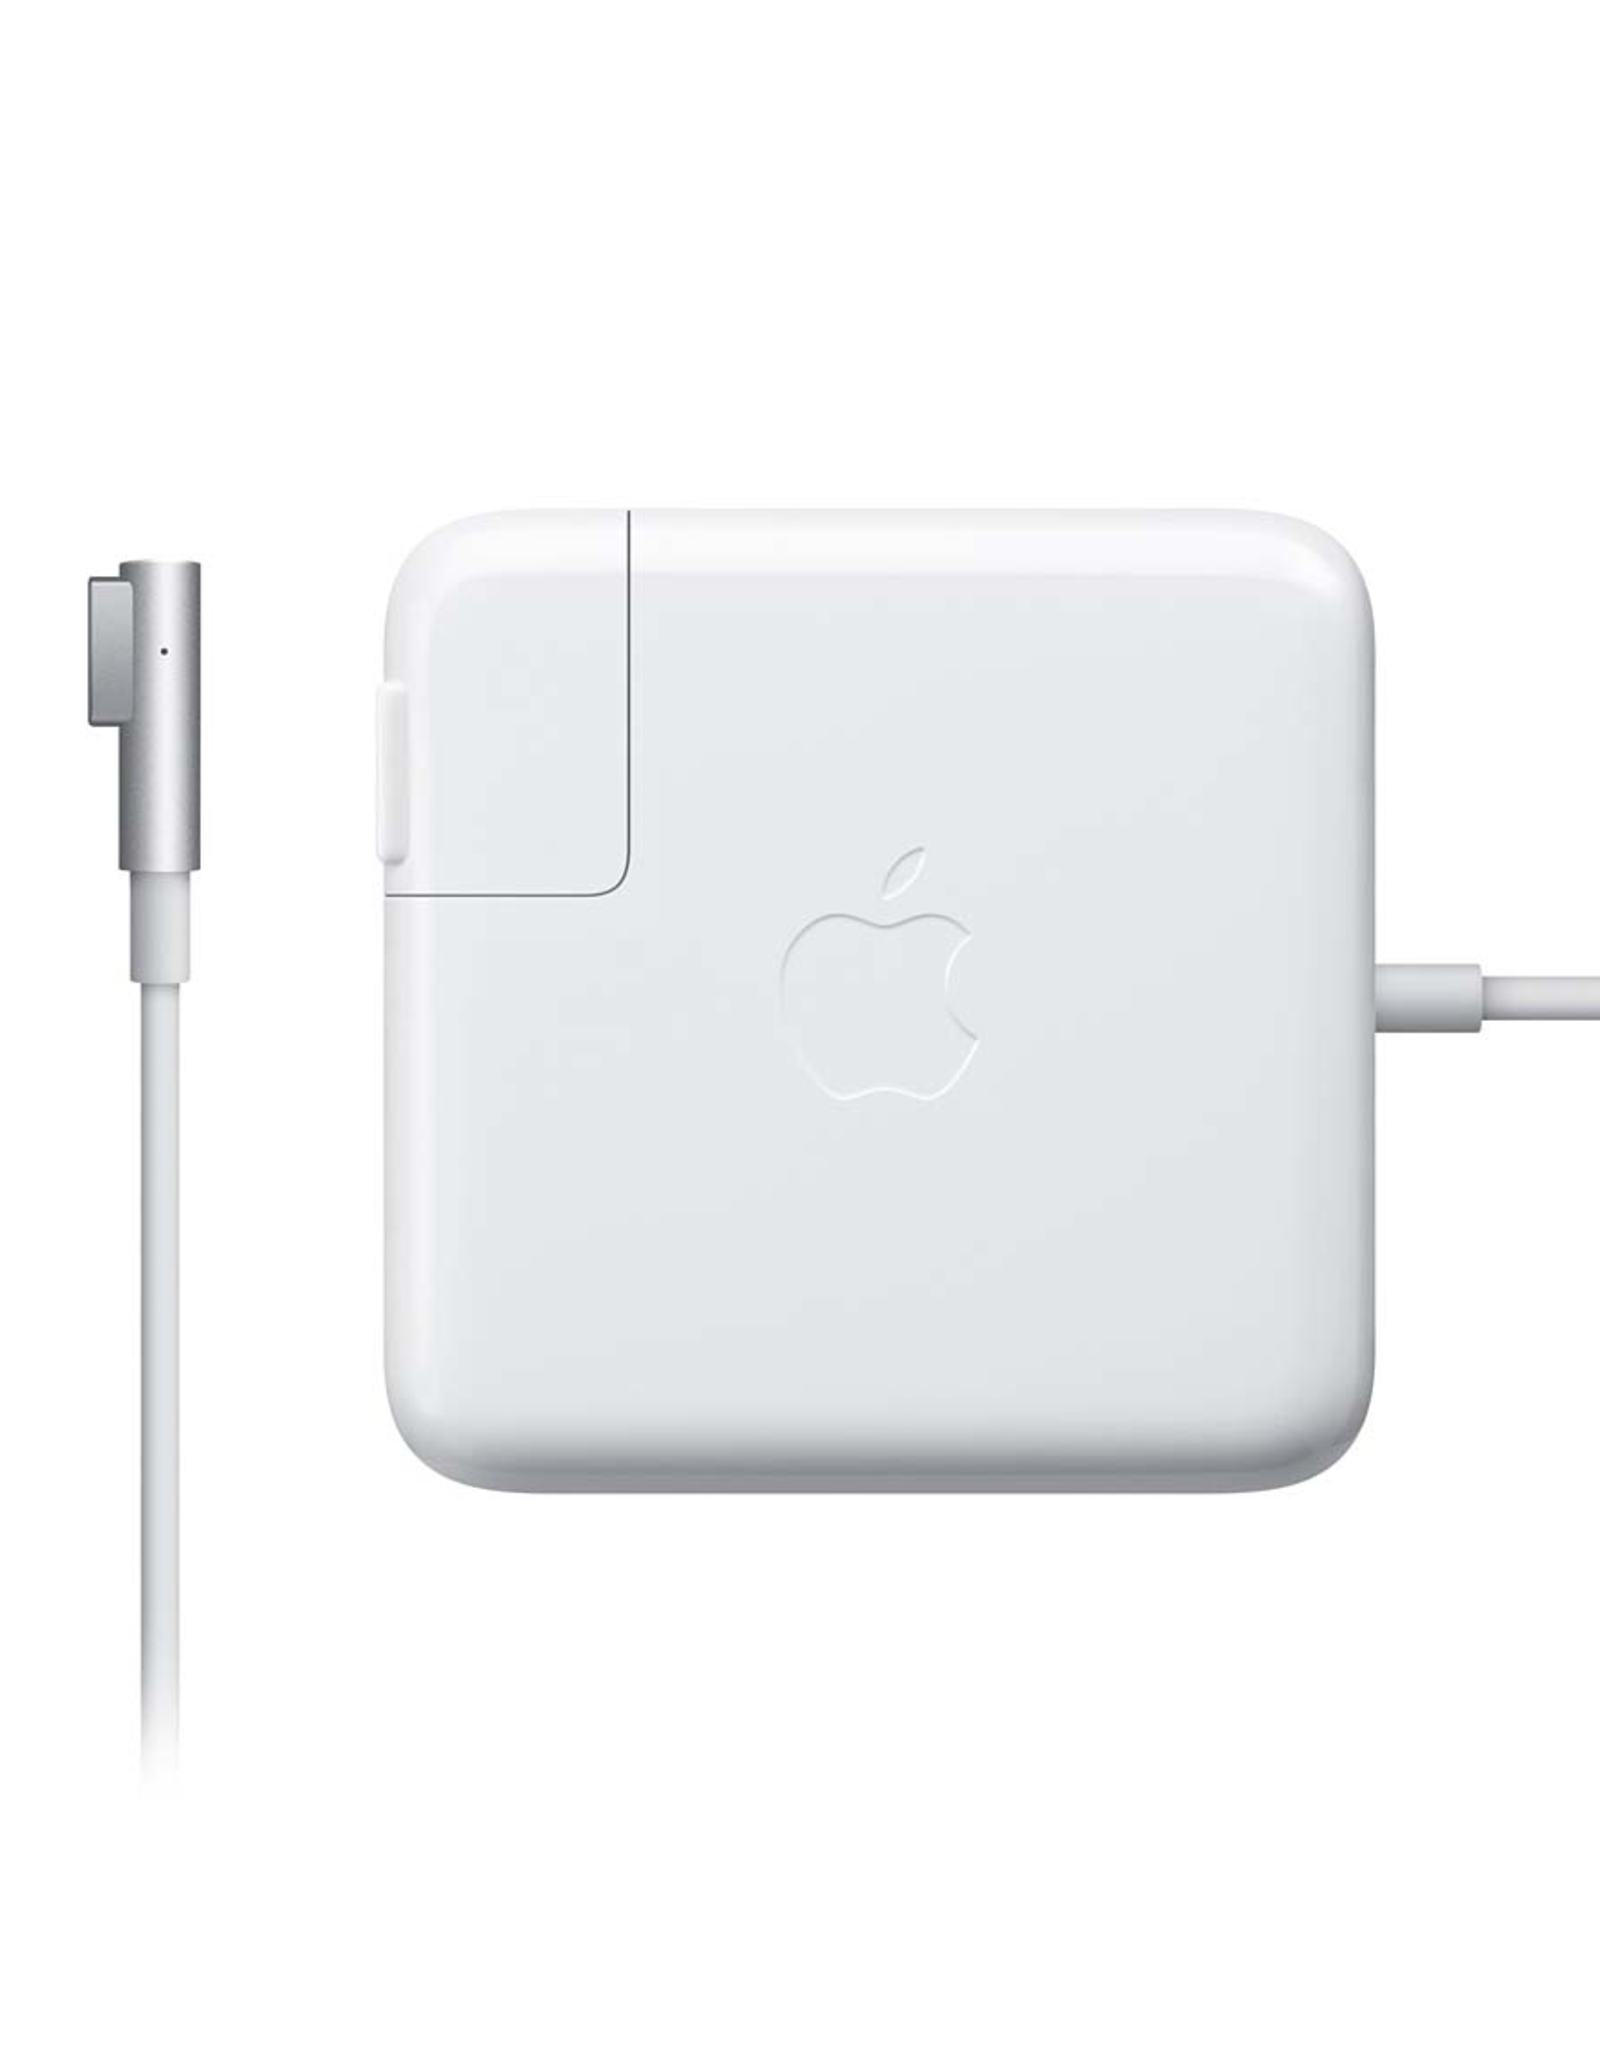 Apple Apple 60W MagSafe Power Adapter for MacBook/Macbook Pro 13" (2008-2012) - Service Stock